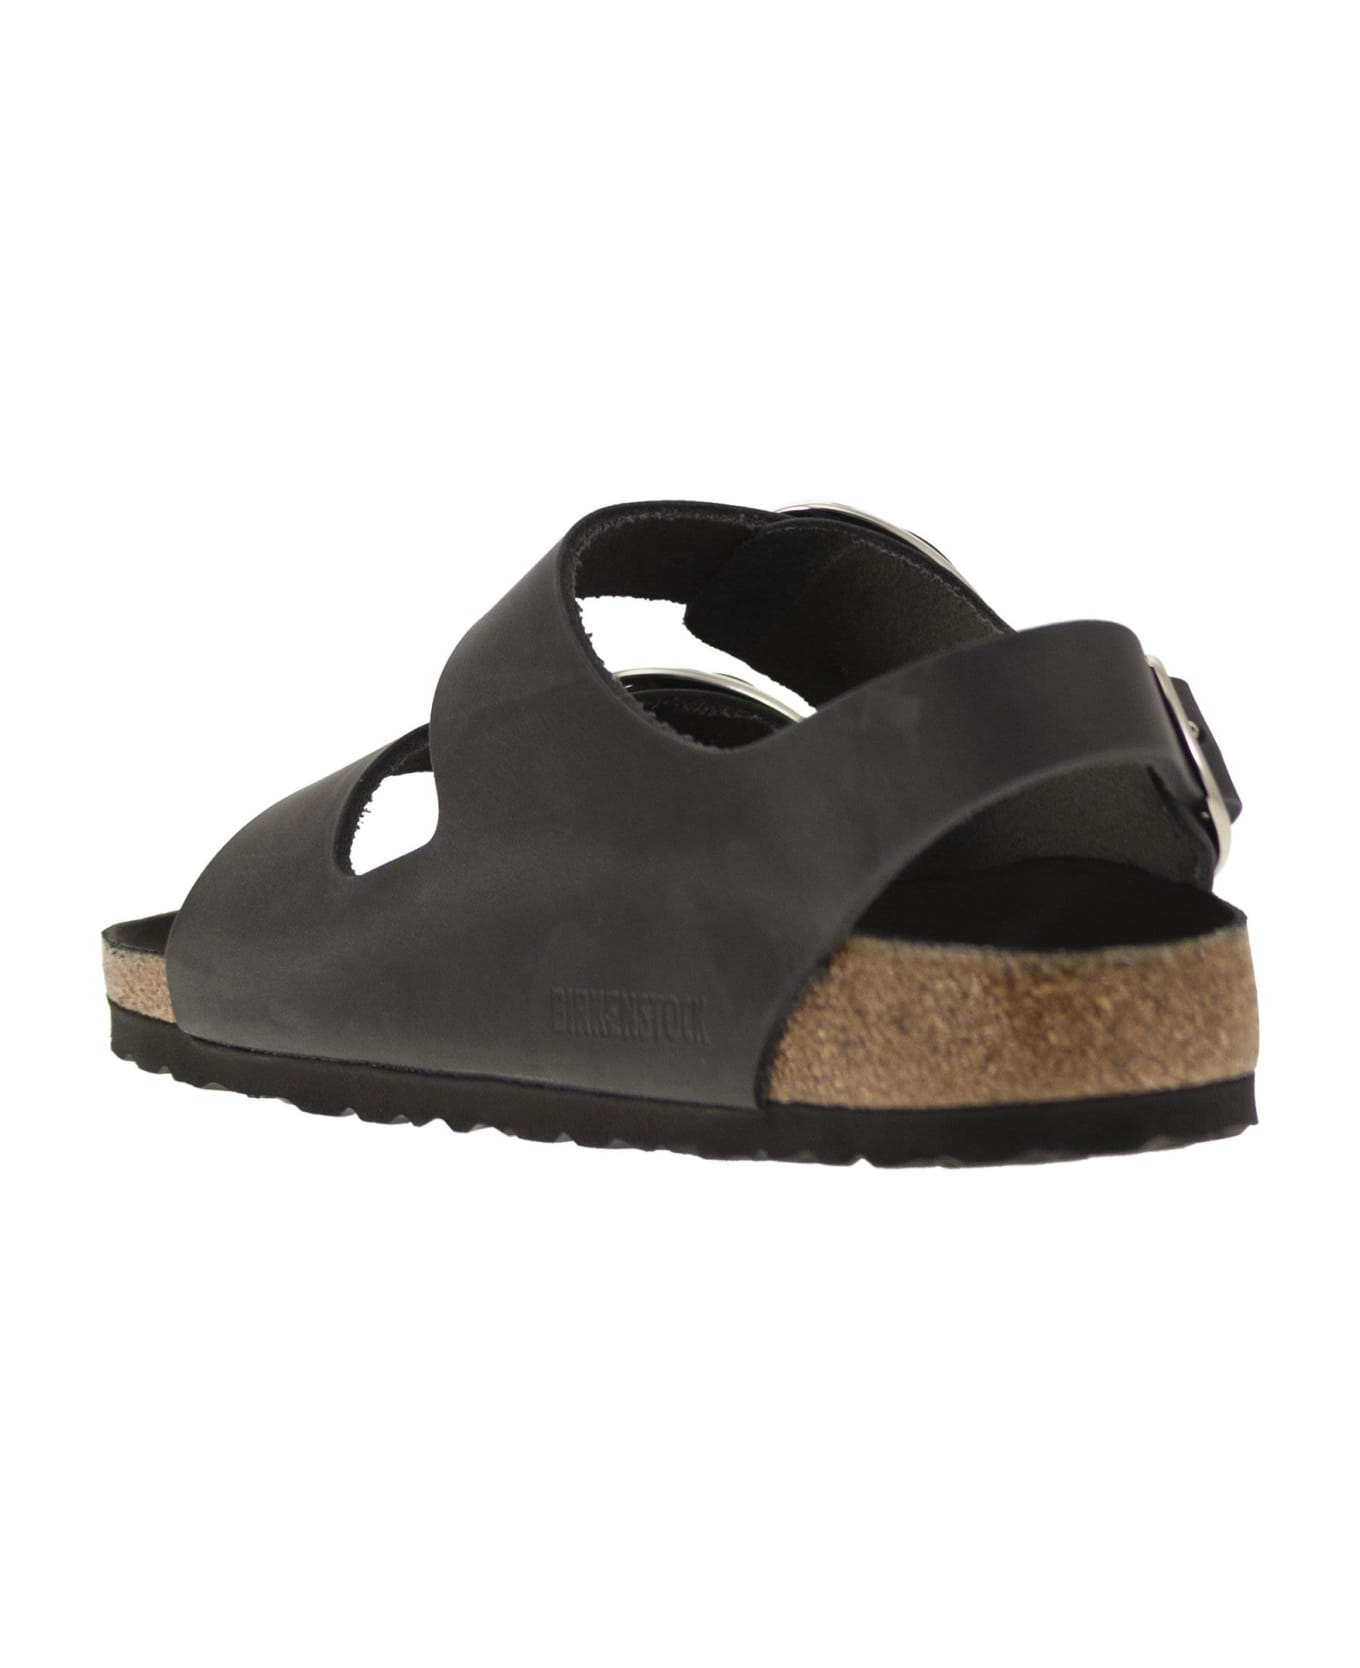 Birkenstock Arizona - Sandal With Large Buckles - Black